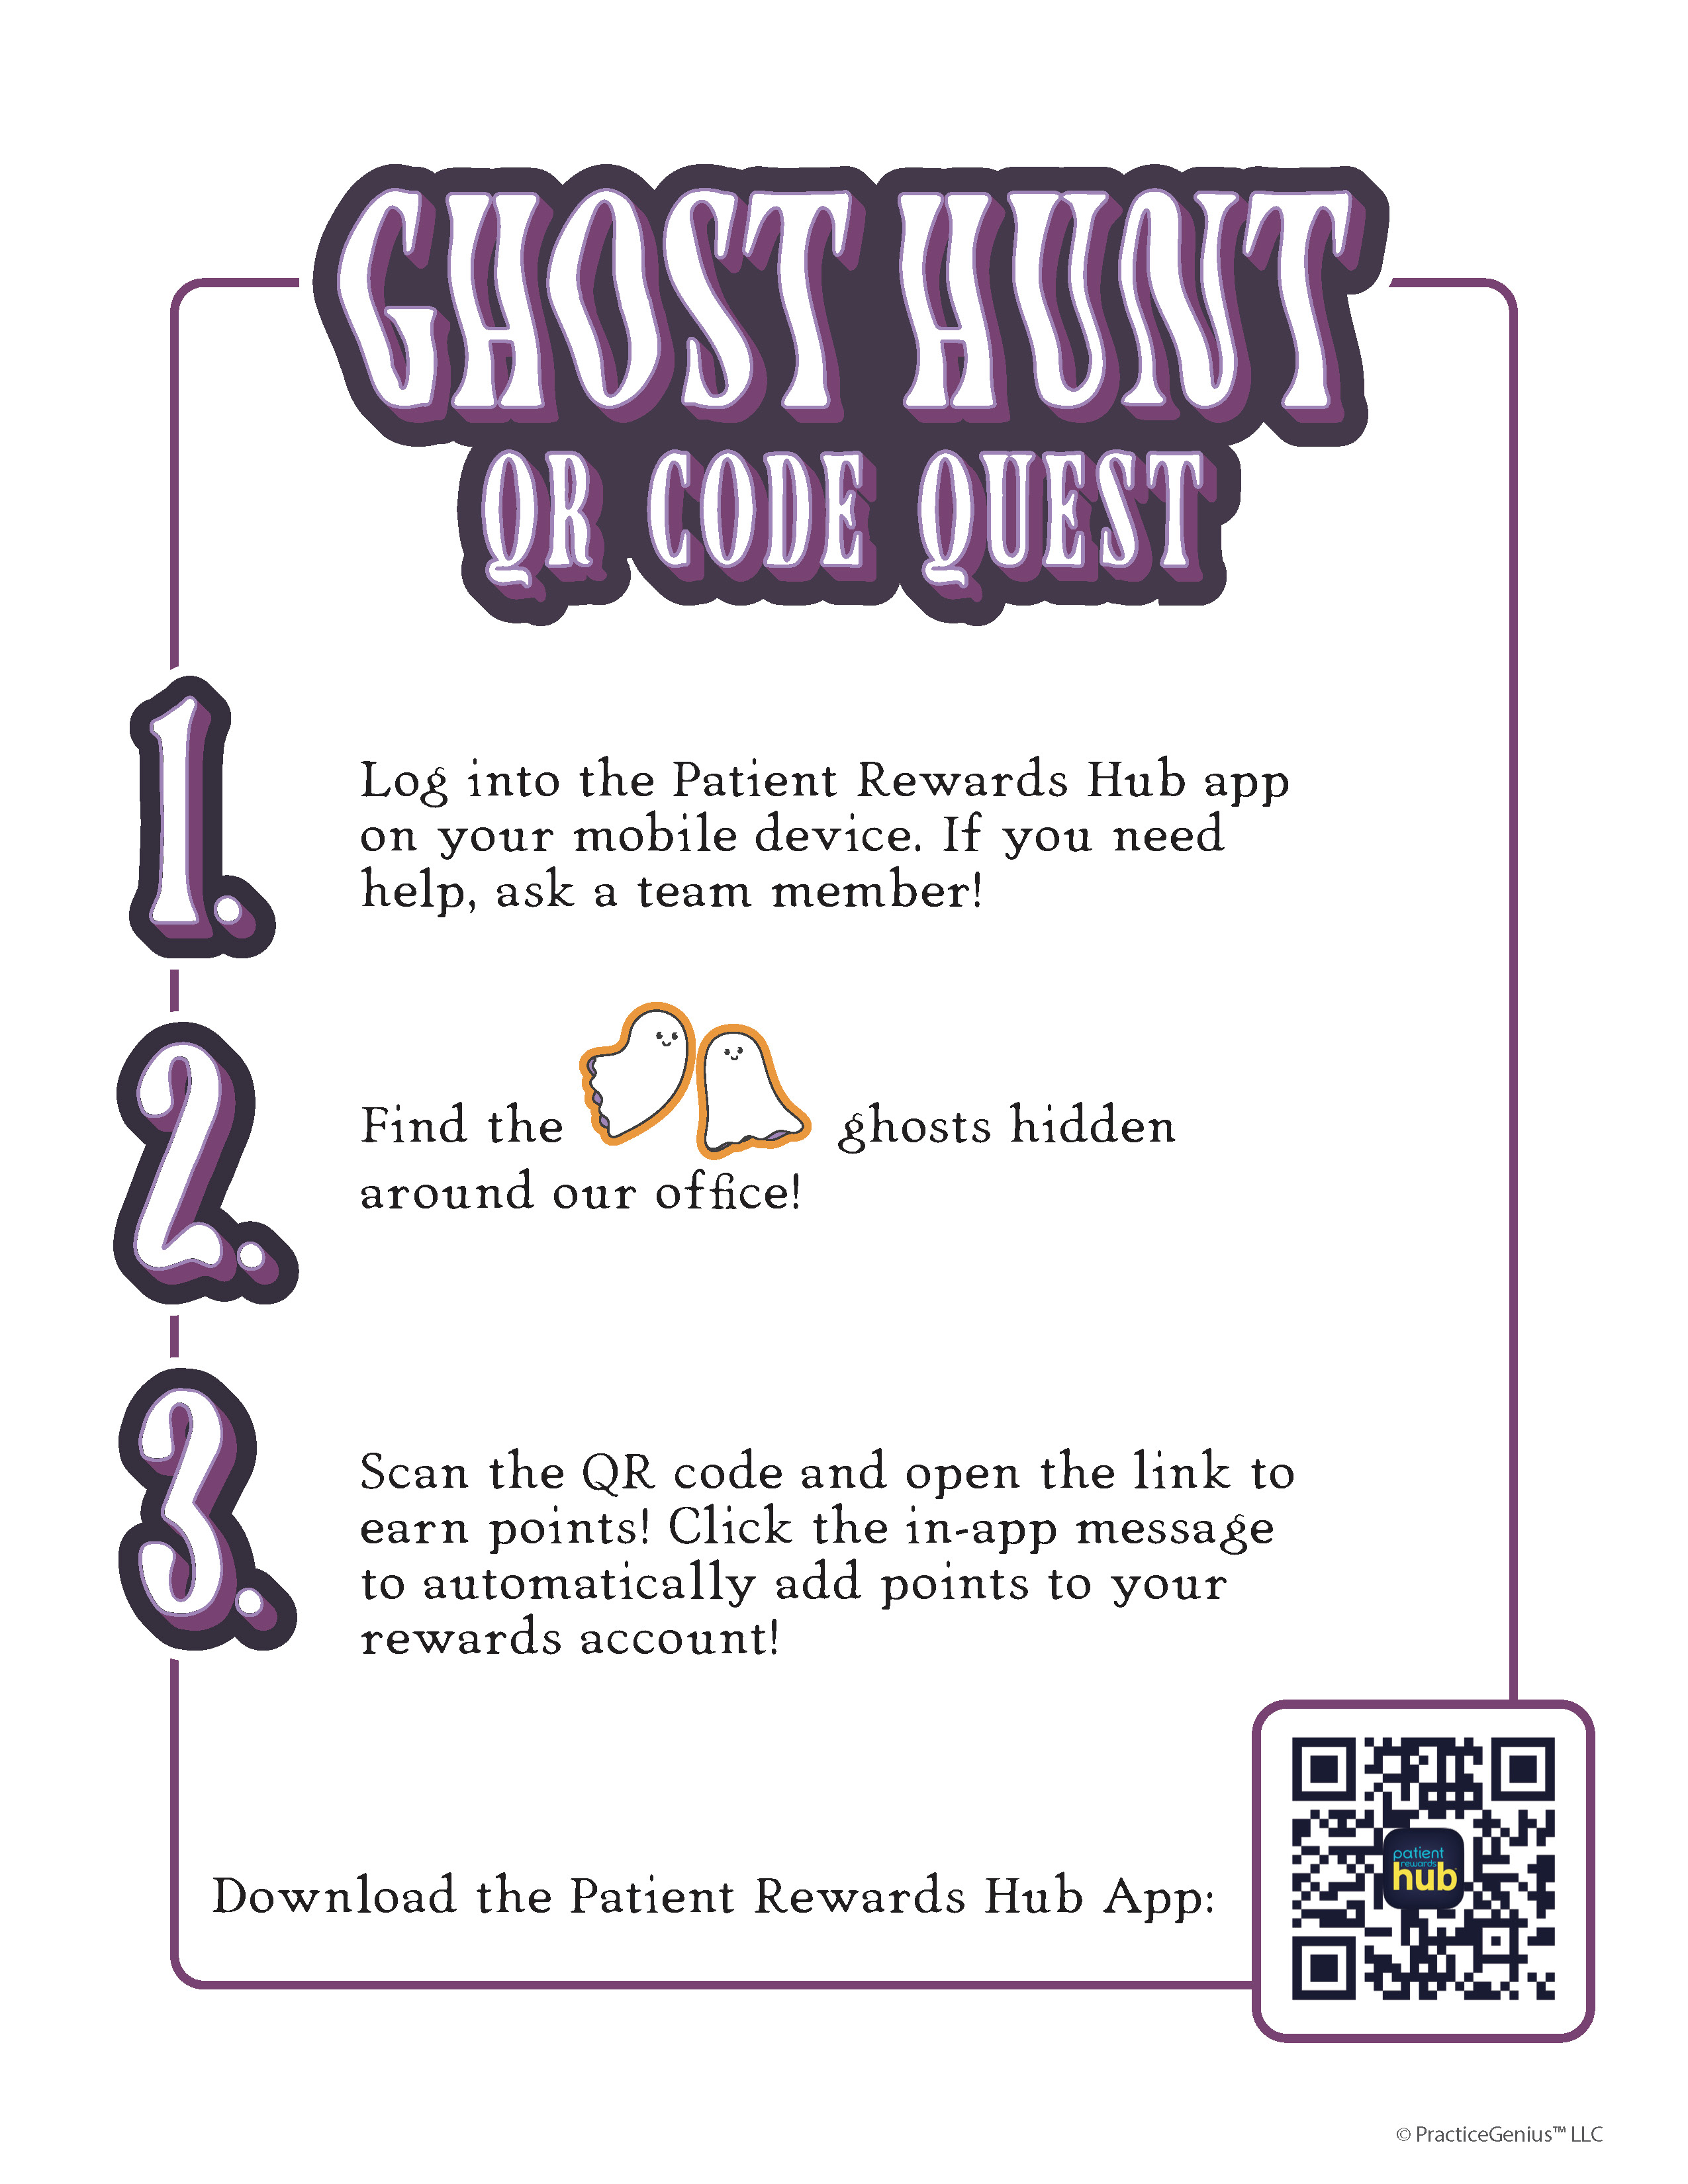 Ghost_QRHunt_PRH Instructions.jpg